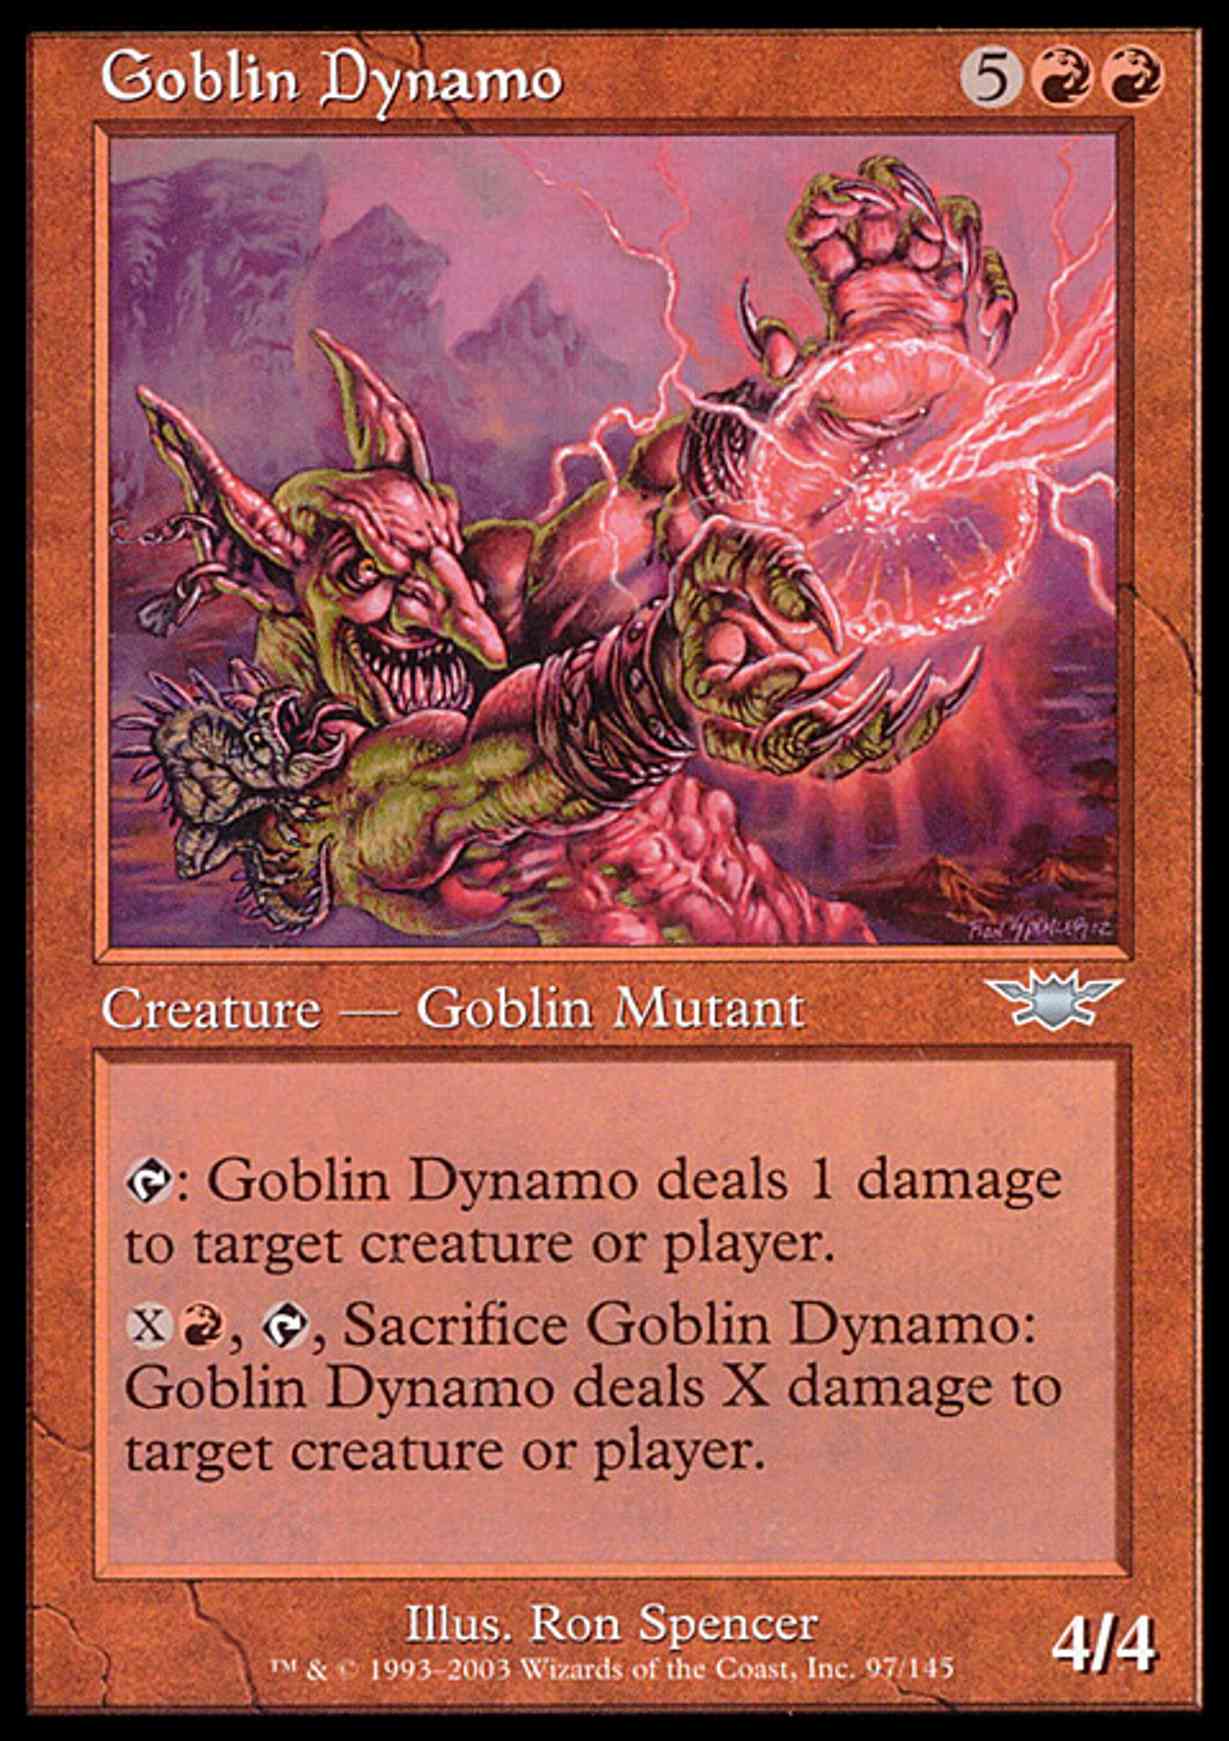 Goblin Dynamo magic card front